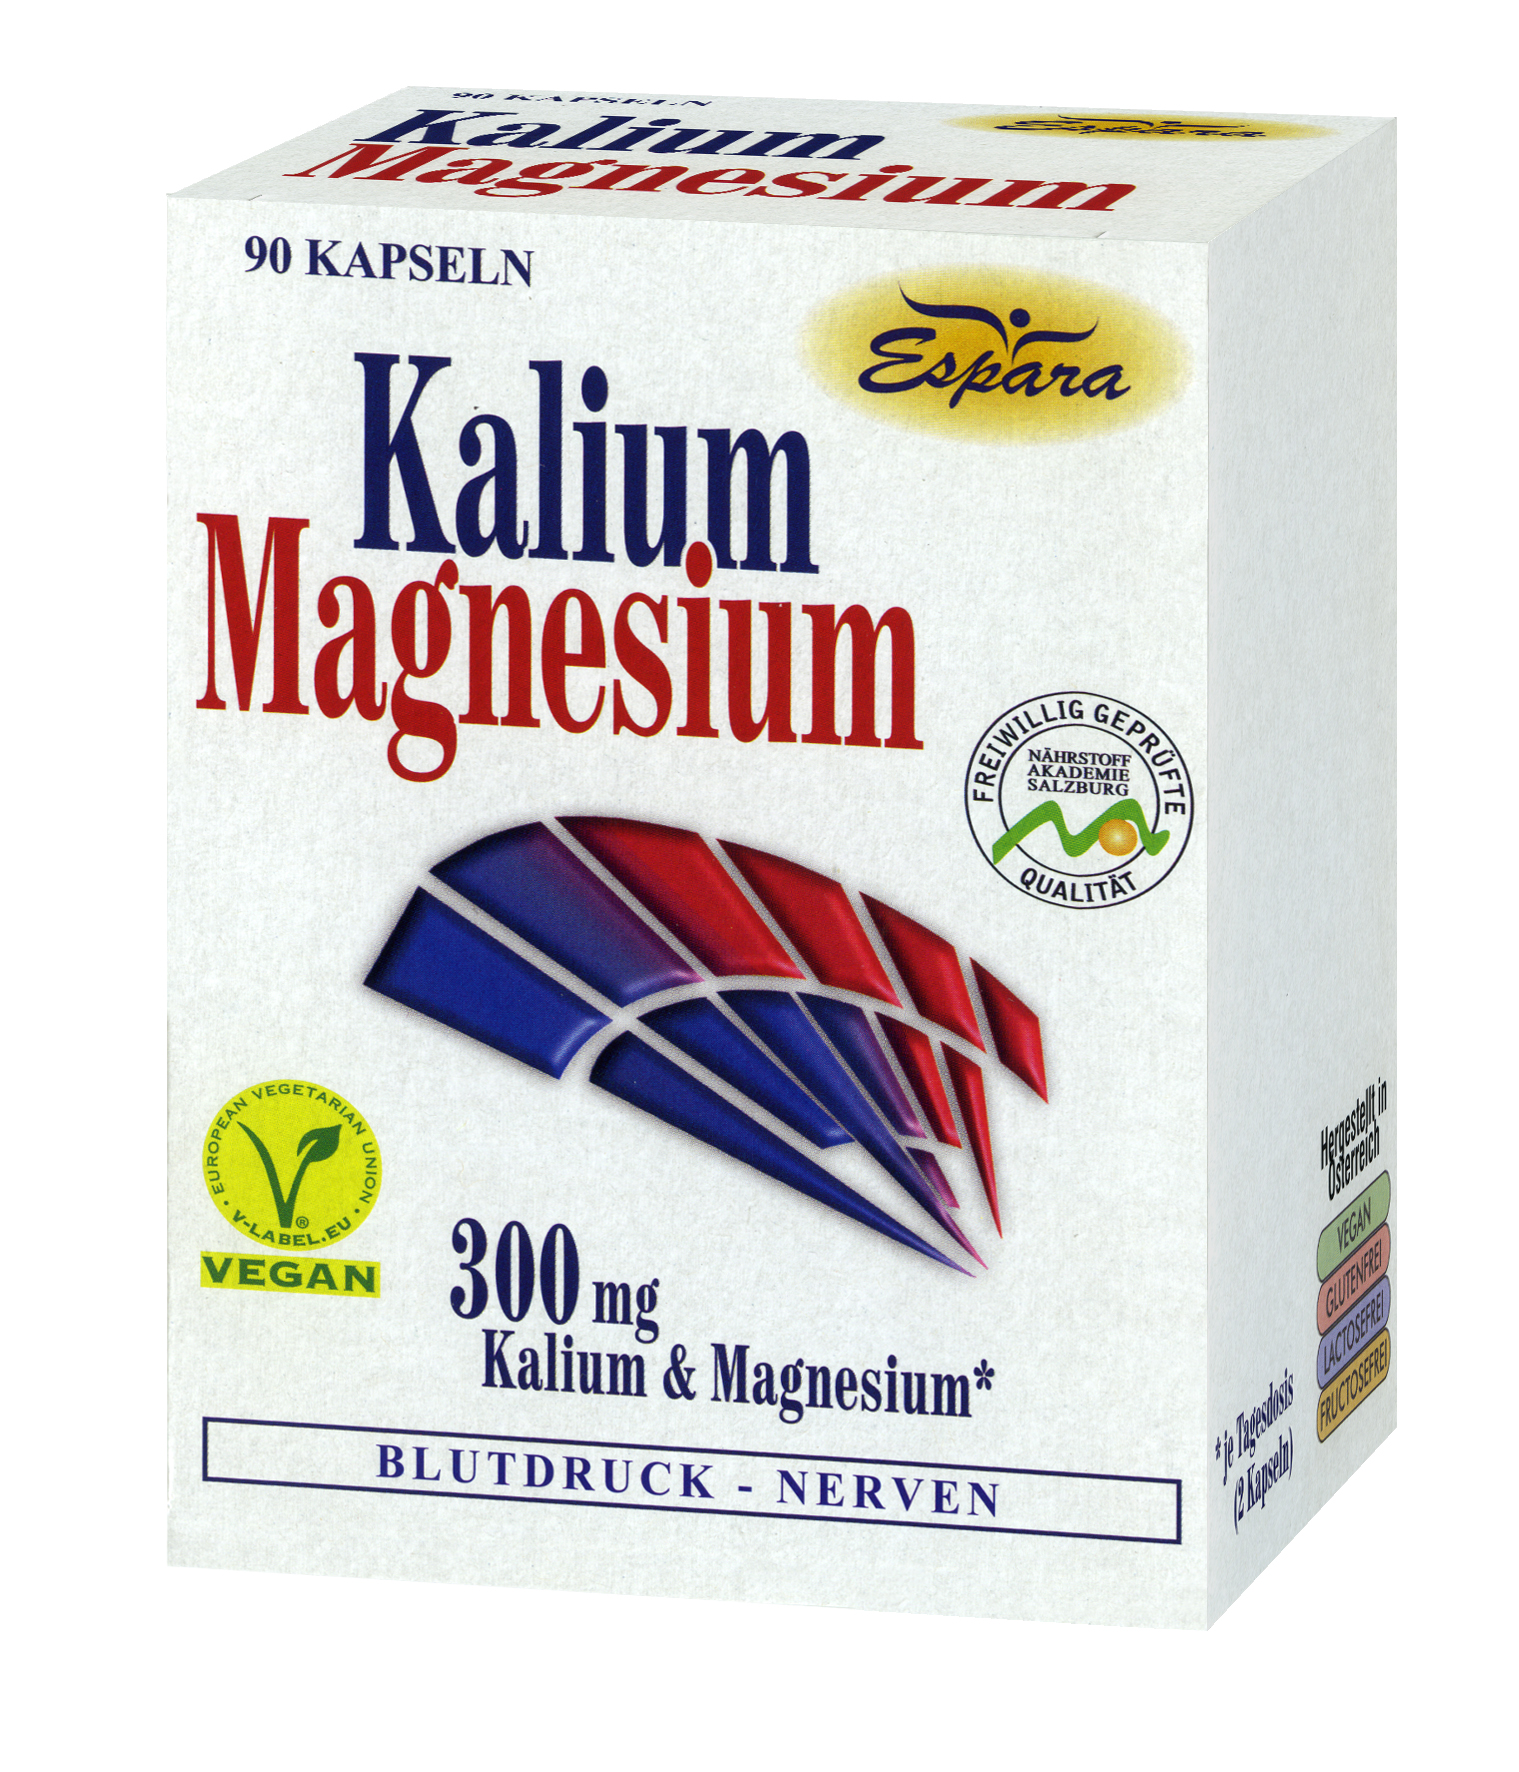 Espara Kalium-Magnesium Kapseln 90 Stk.